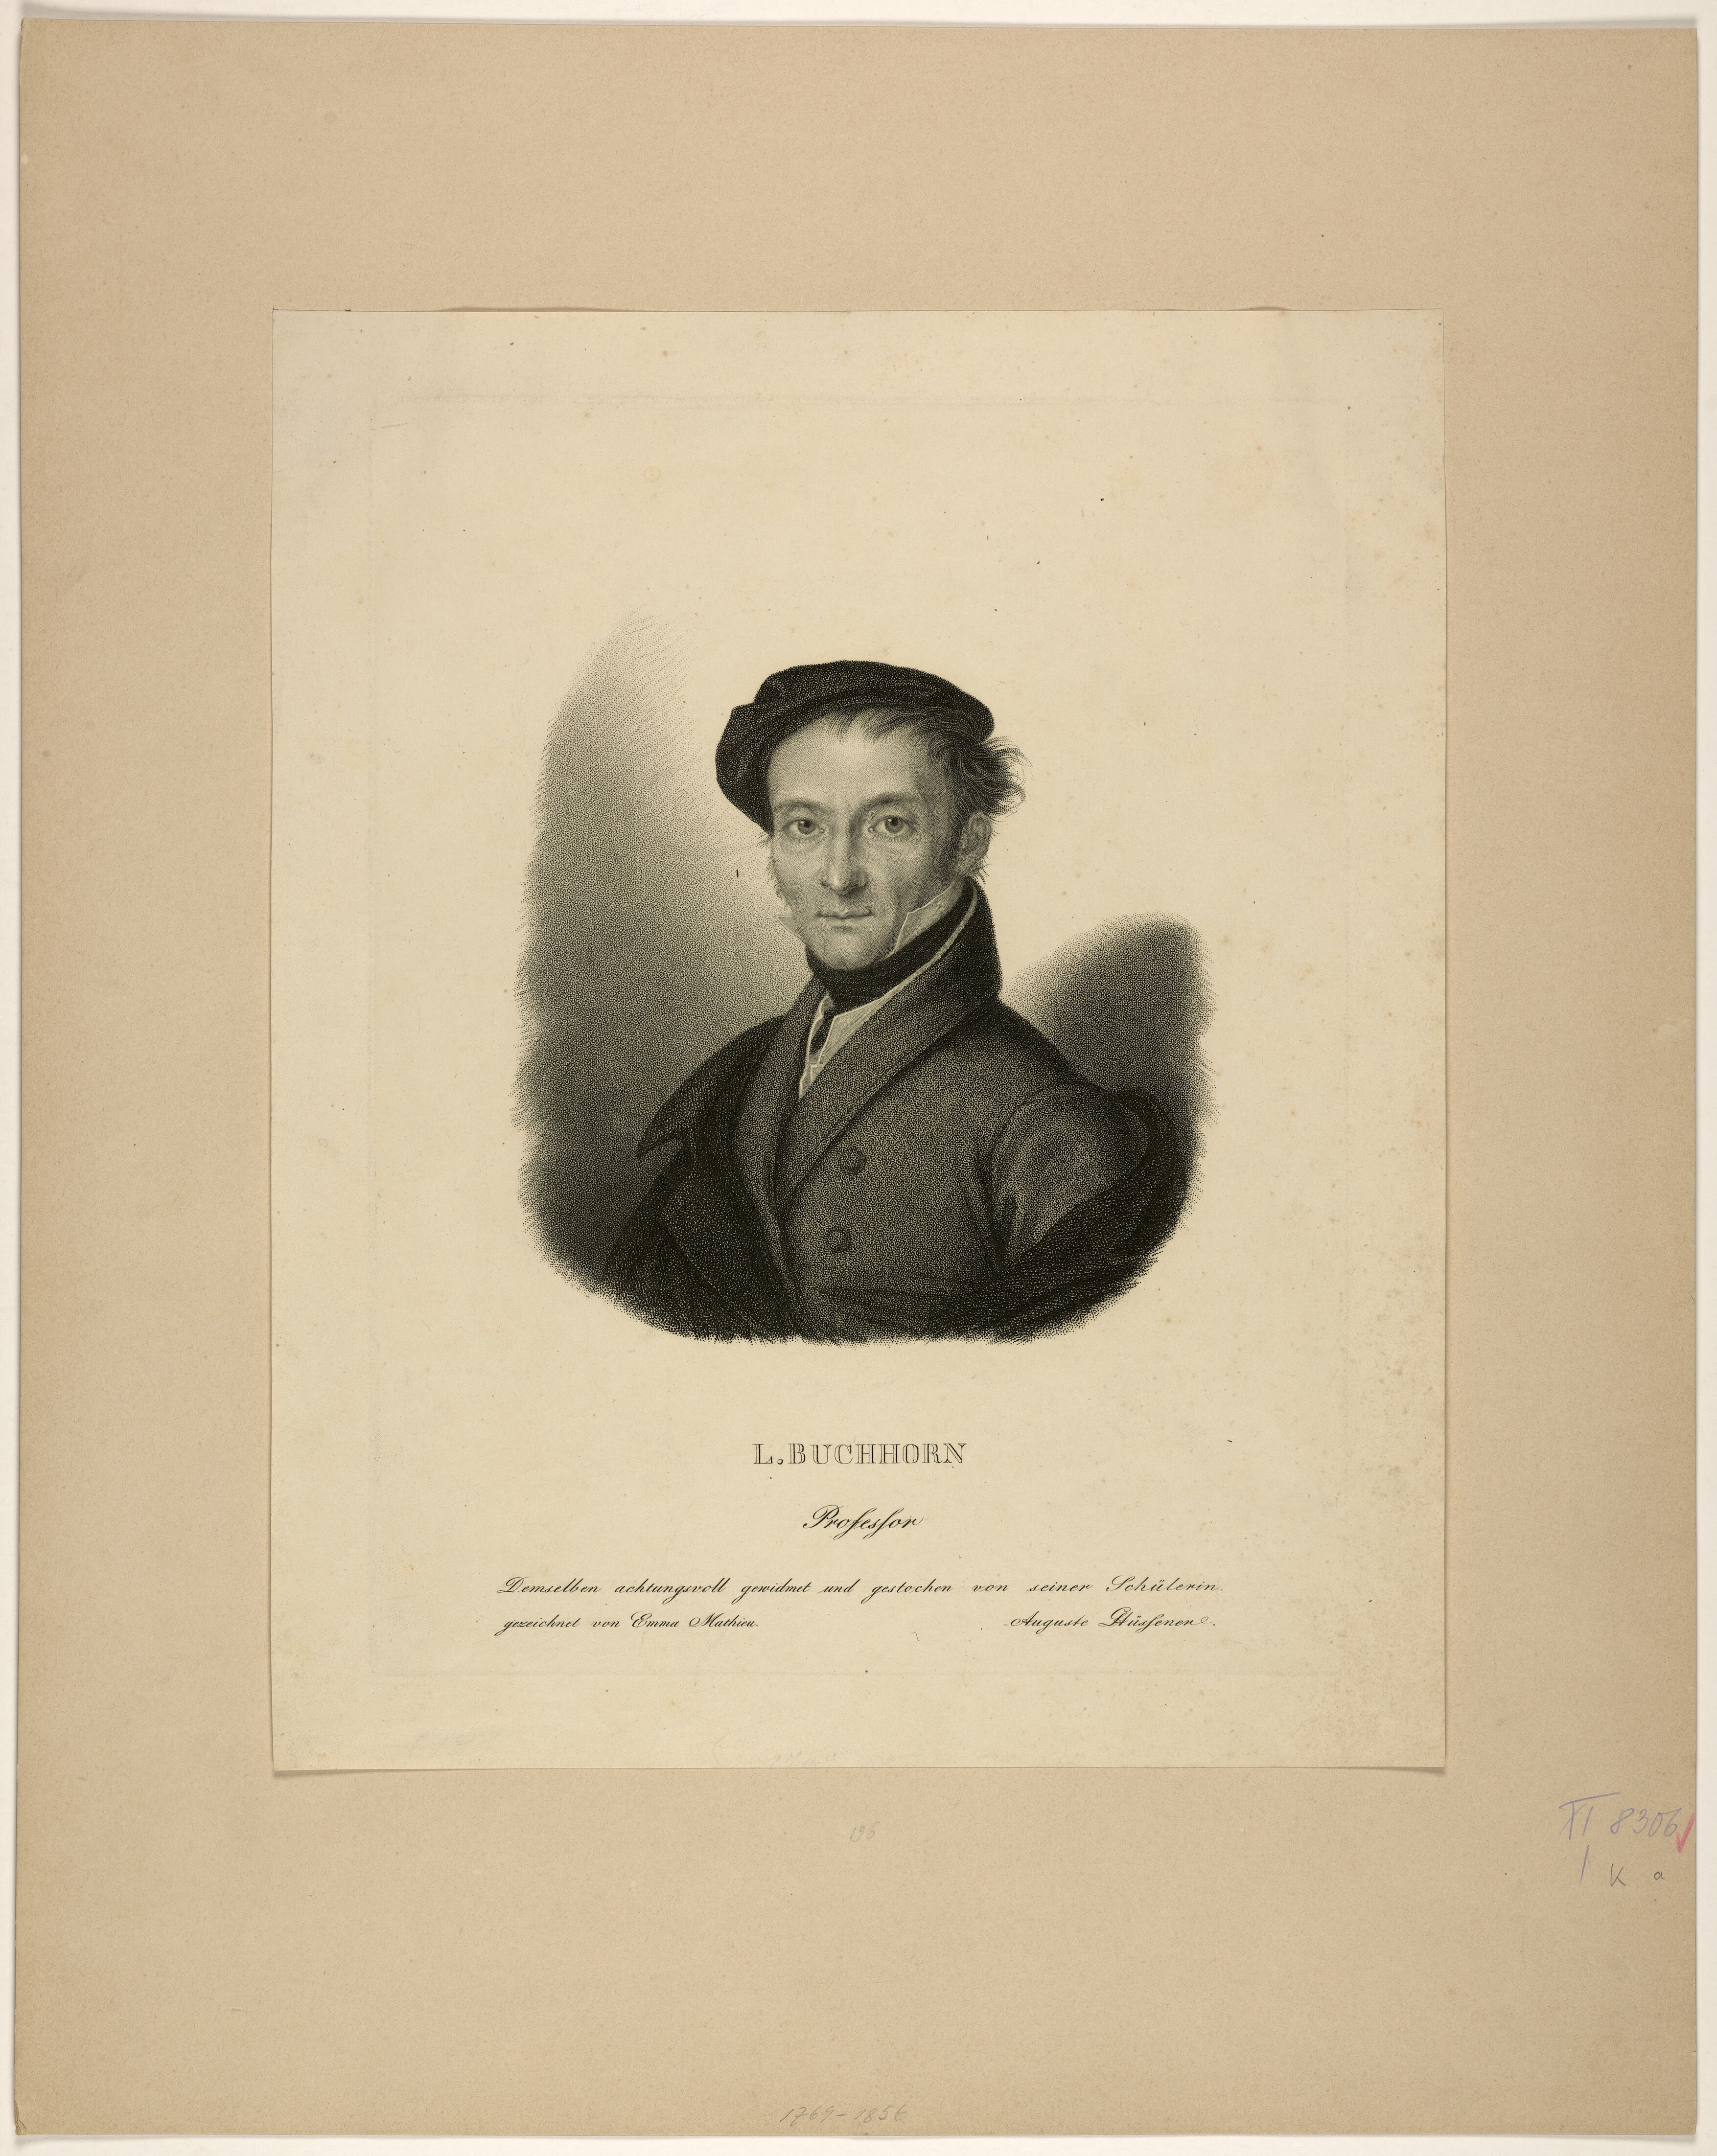 Hüssener, Auguste, und Emma Mathieu: Porträt Ludwig Buchhorn (Stiftung Stadtmuseum Berlin Public Domain Mark)